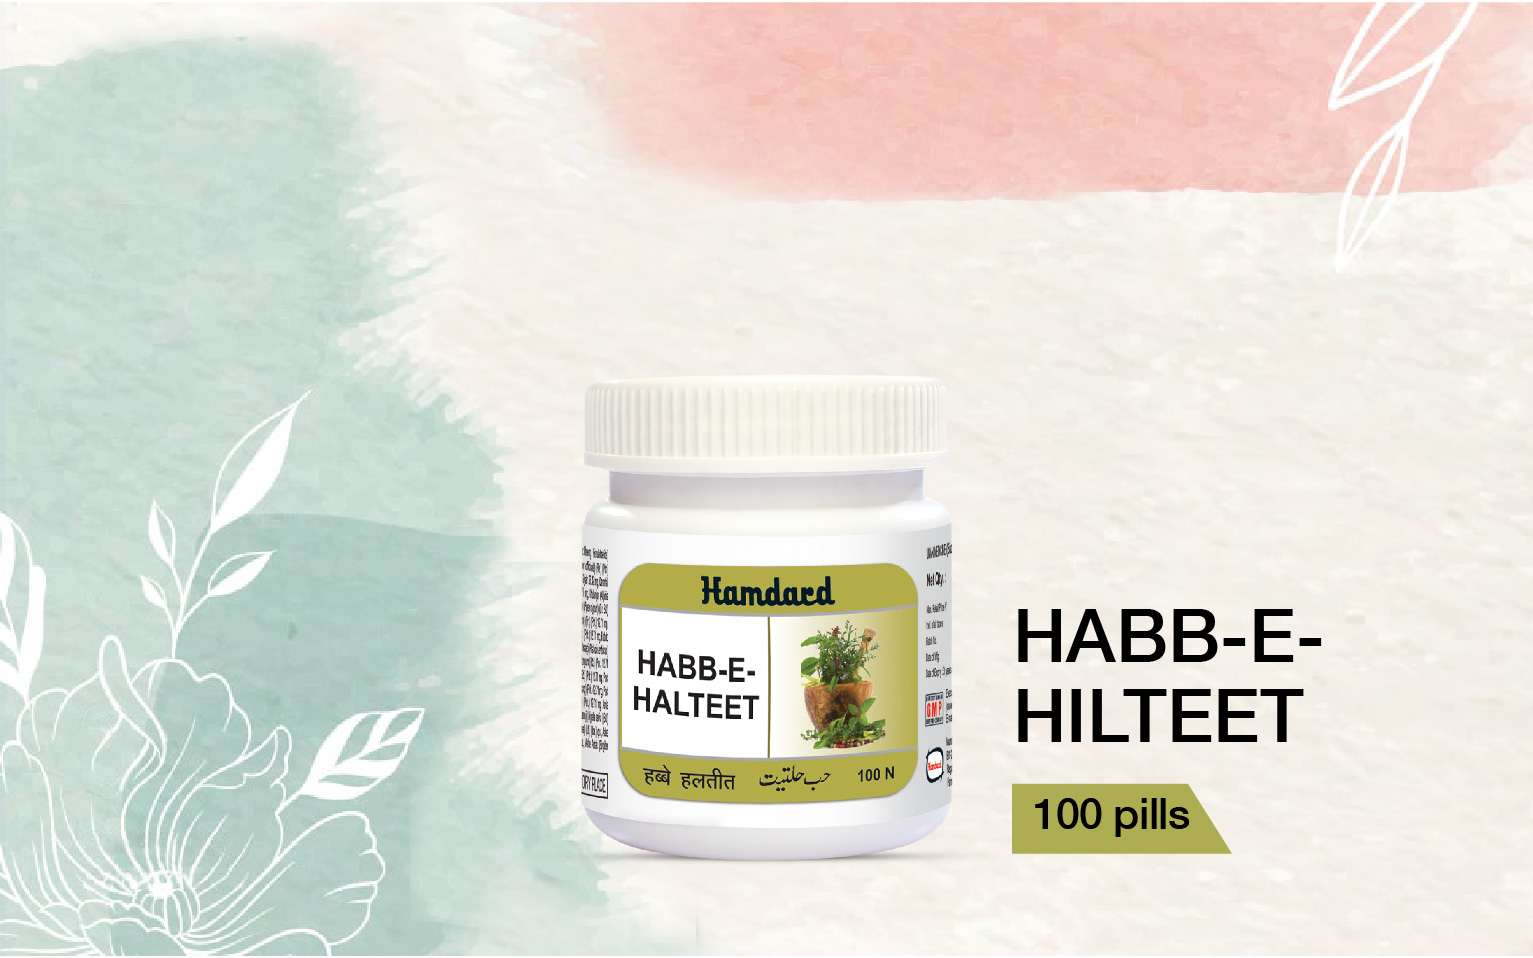 HABB-E-HILTEET